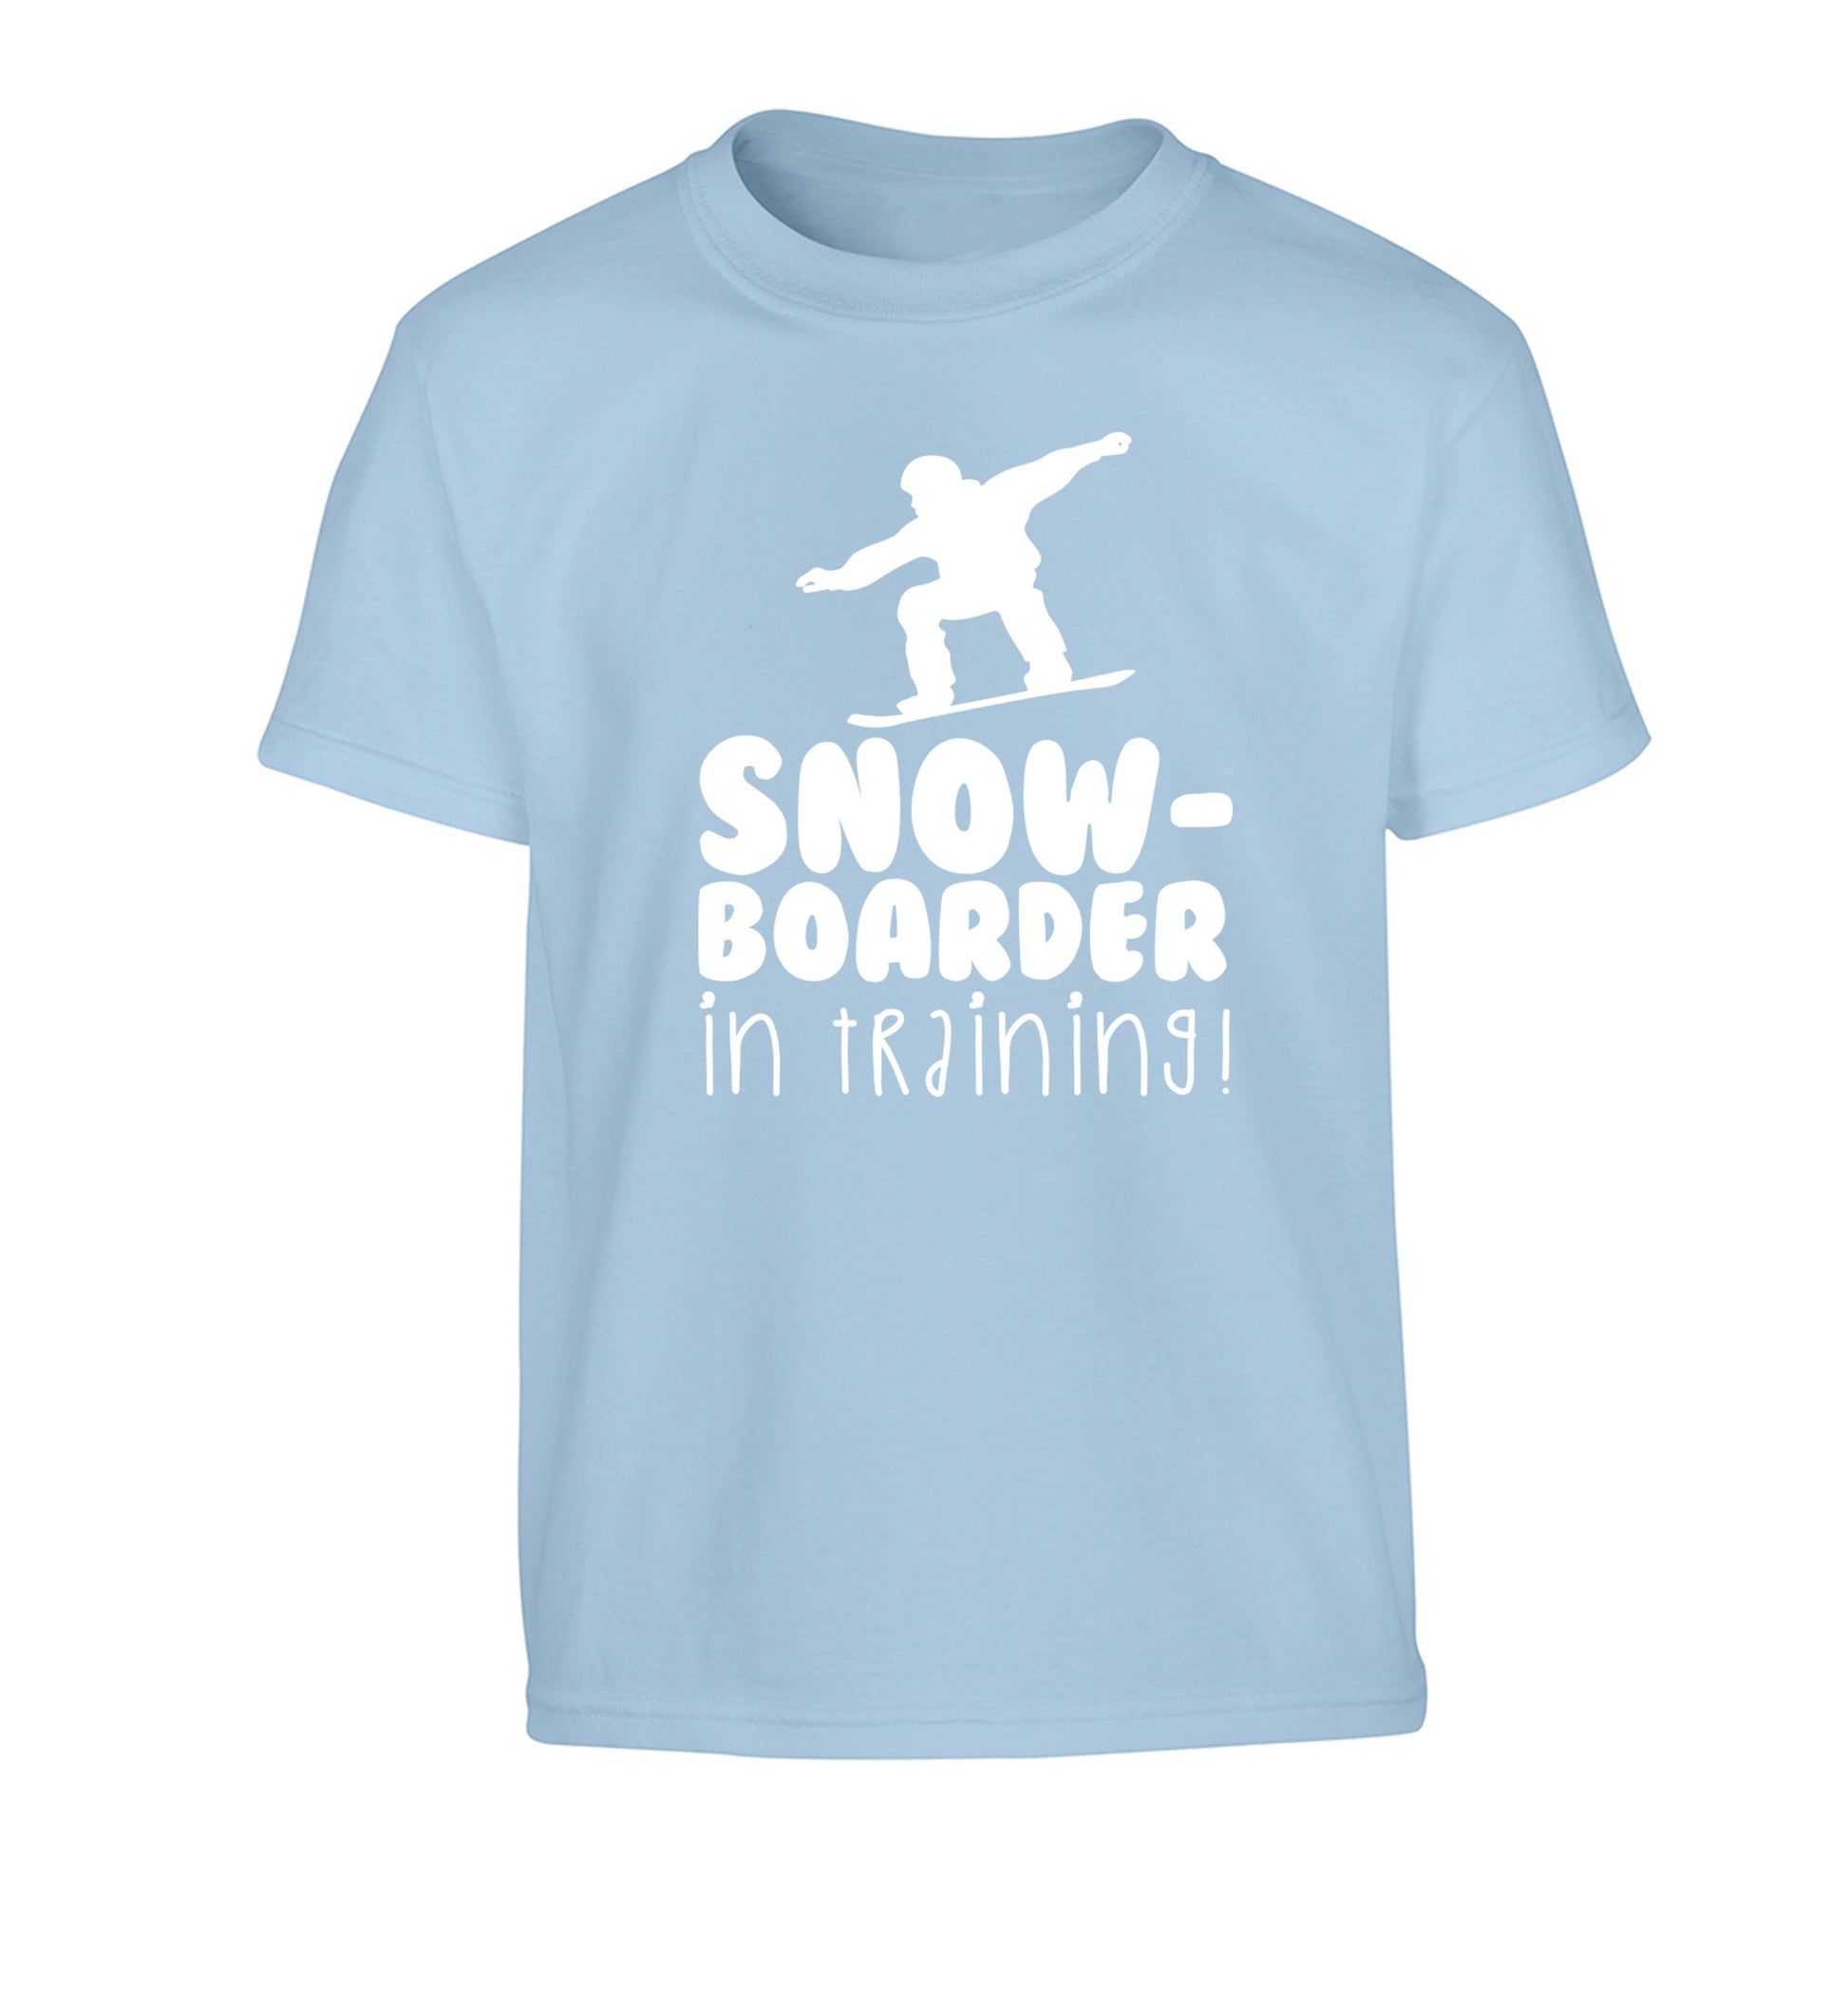 Snowboarder in training Children's light blue Tshirt 12-14 Years